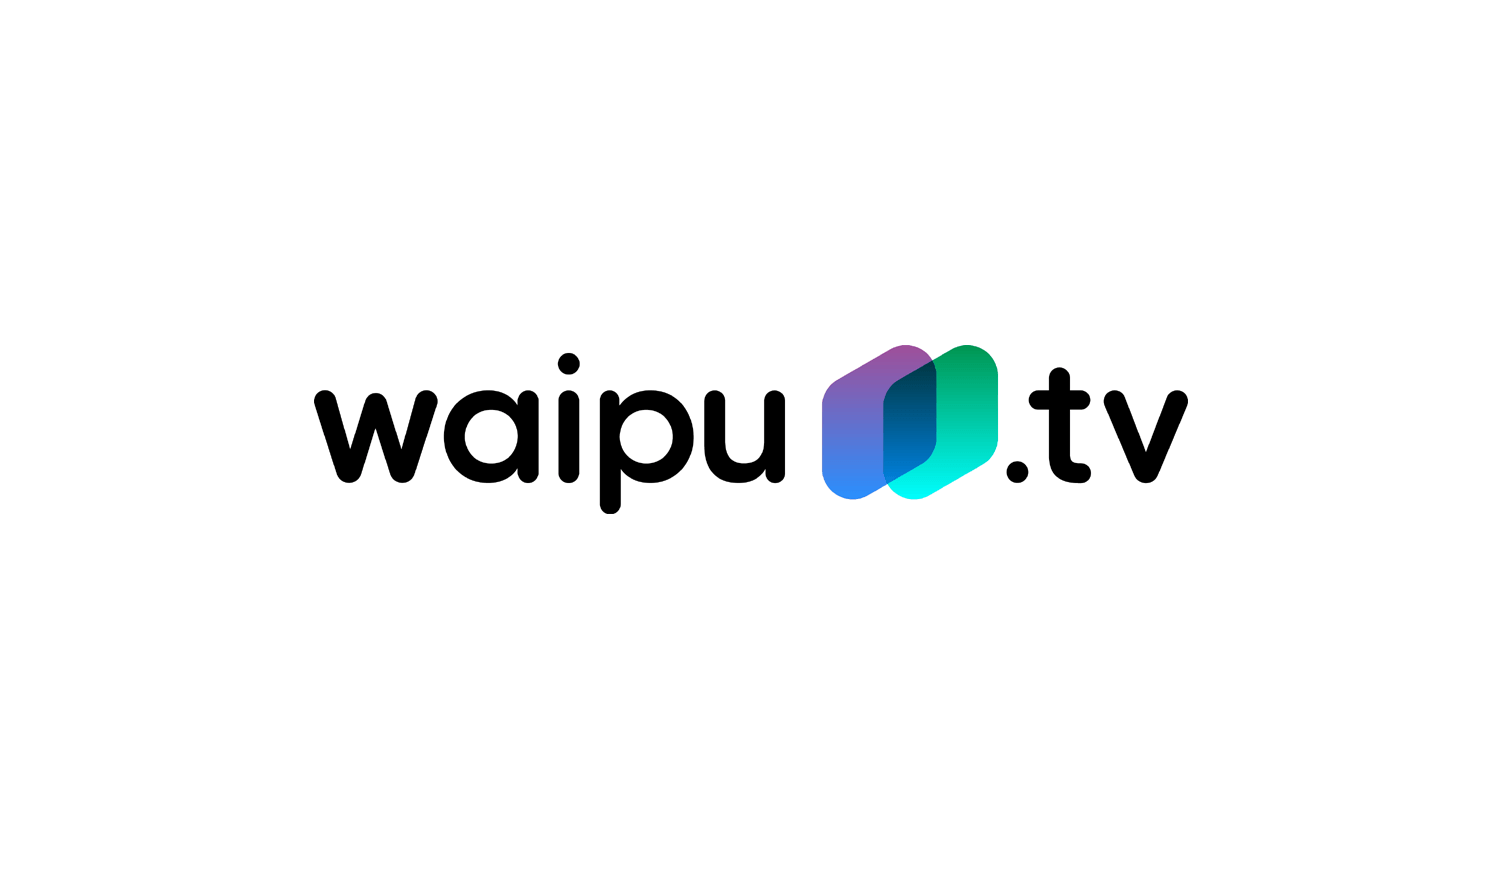 waipu.tv kostenlos testen